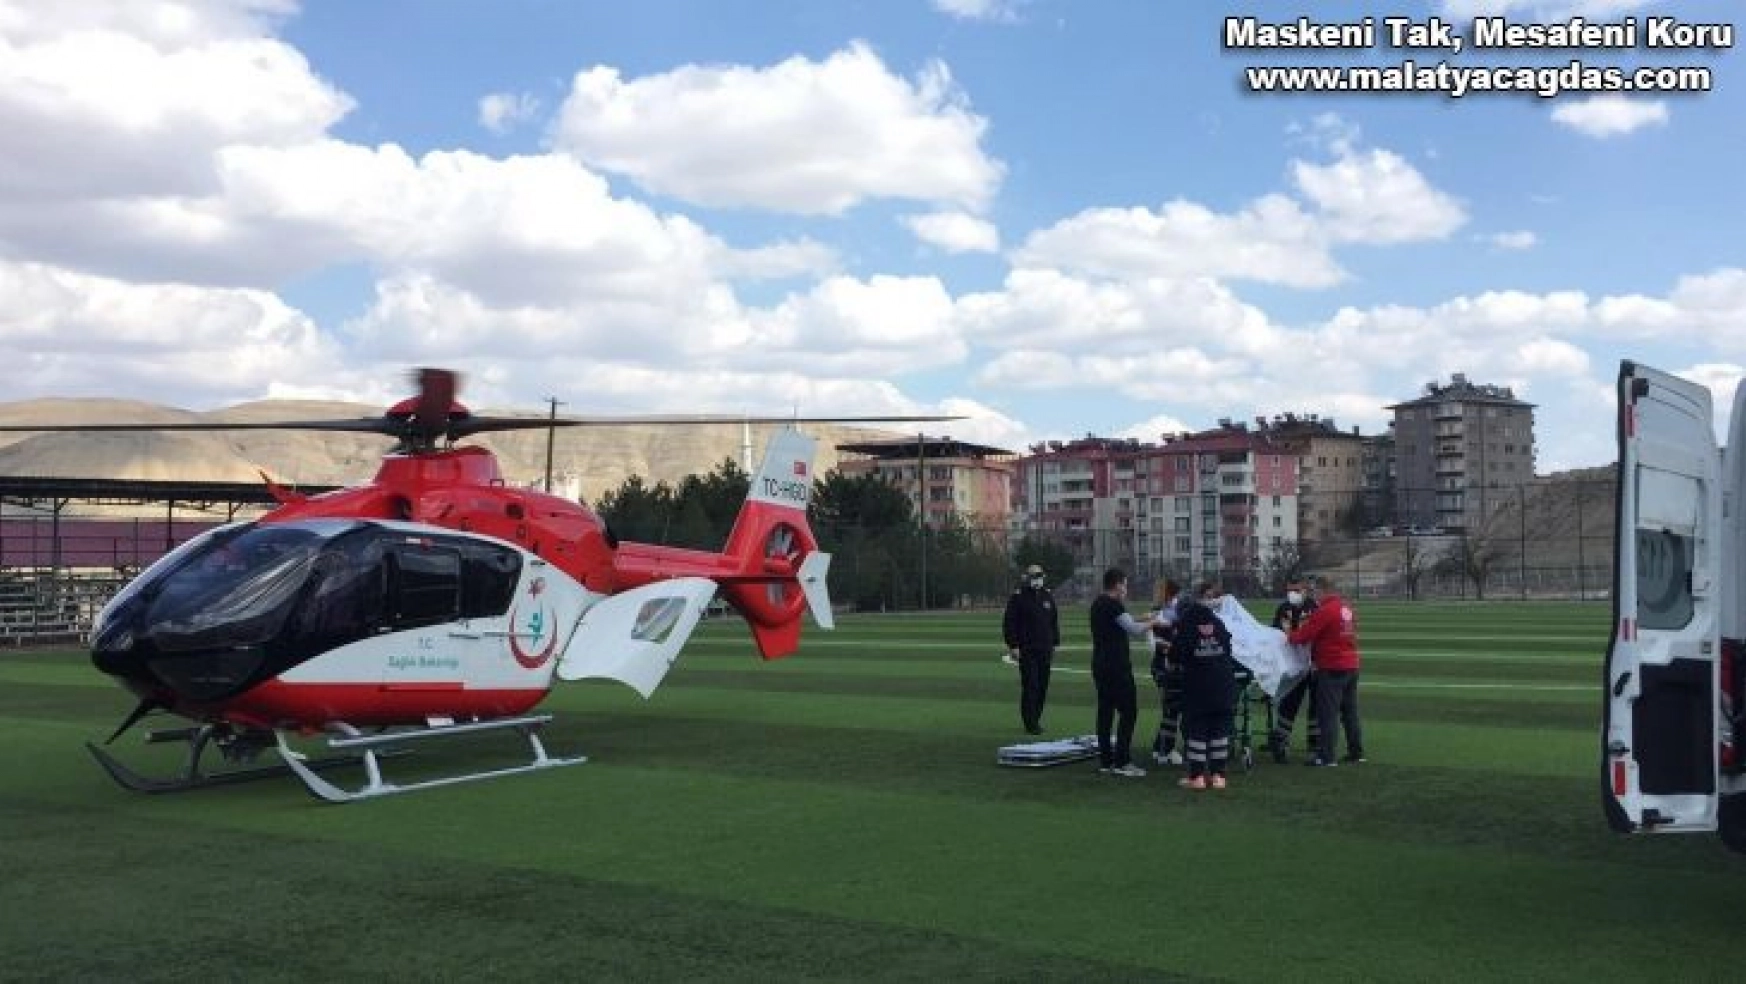 Kazada ağır yaralanan kişinin imdadına hava ambulansı yetişti